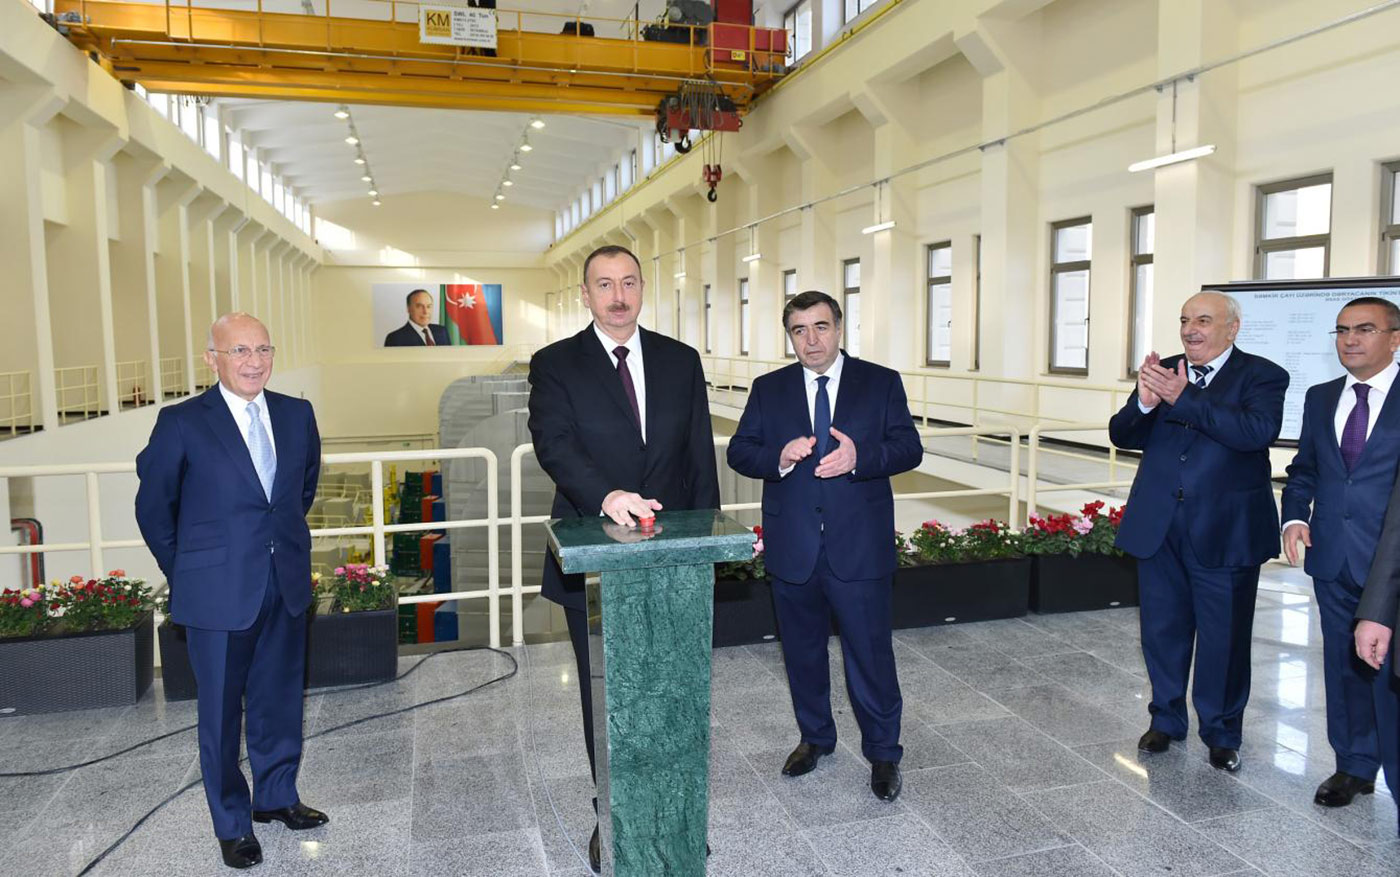 Azerbaijani President Ilham Aliyev stood with Erdal Aksoy and Ahmad Ahmadzada